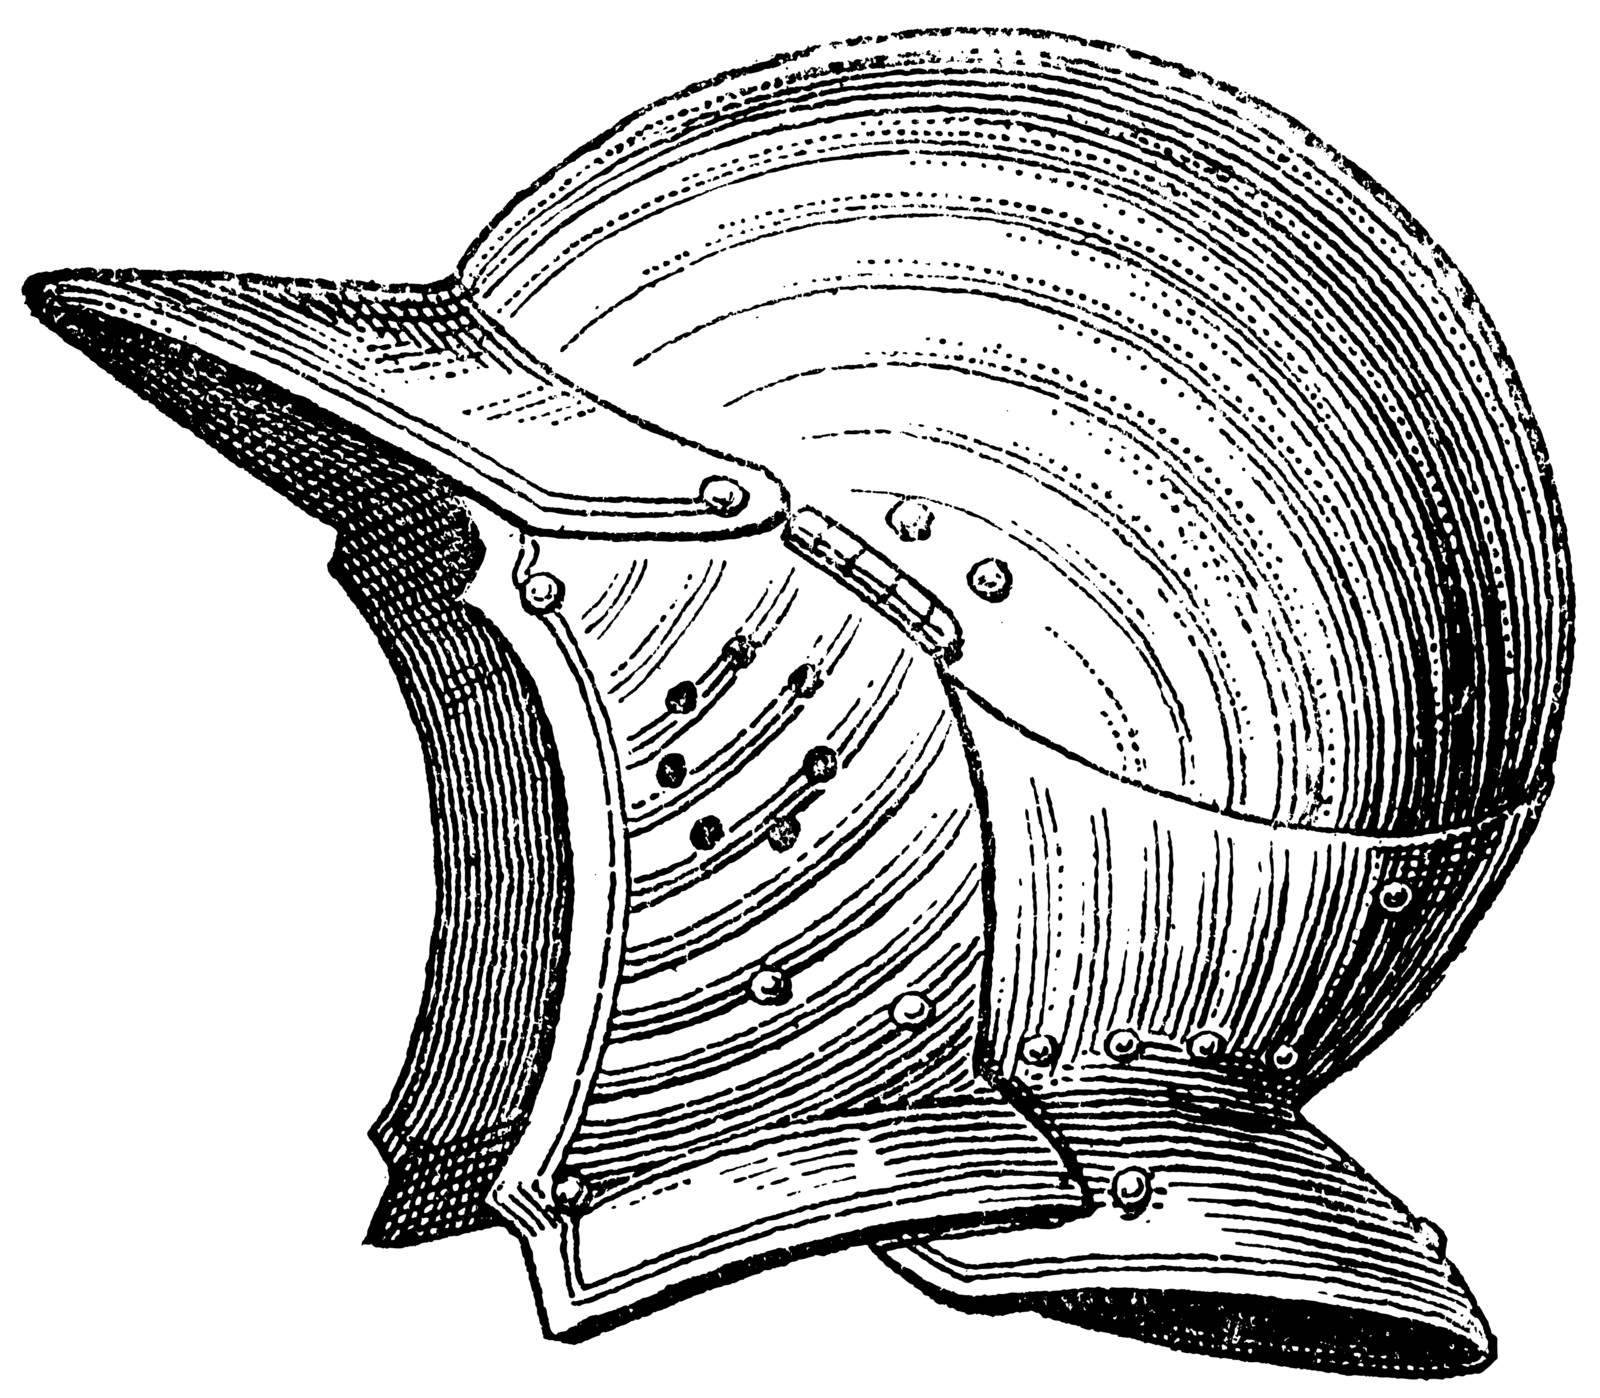 Pot head or helmet or galea vintage engraving. Old engraved illustration of ancient helmet.